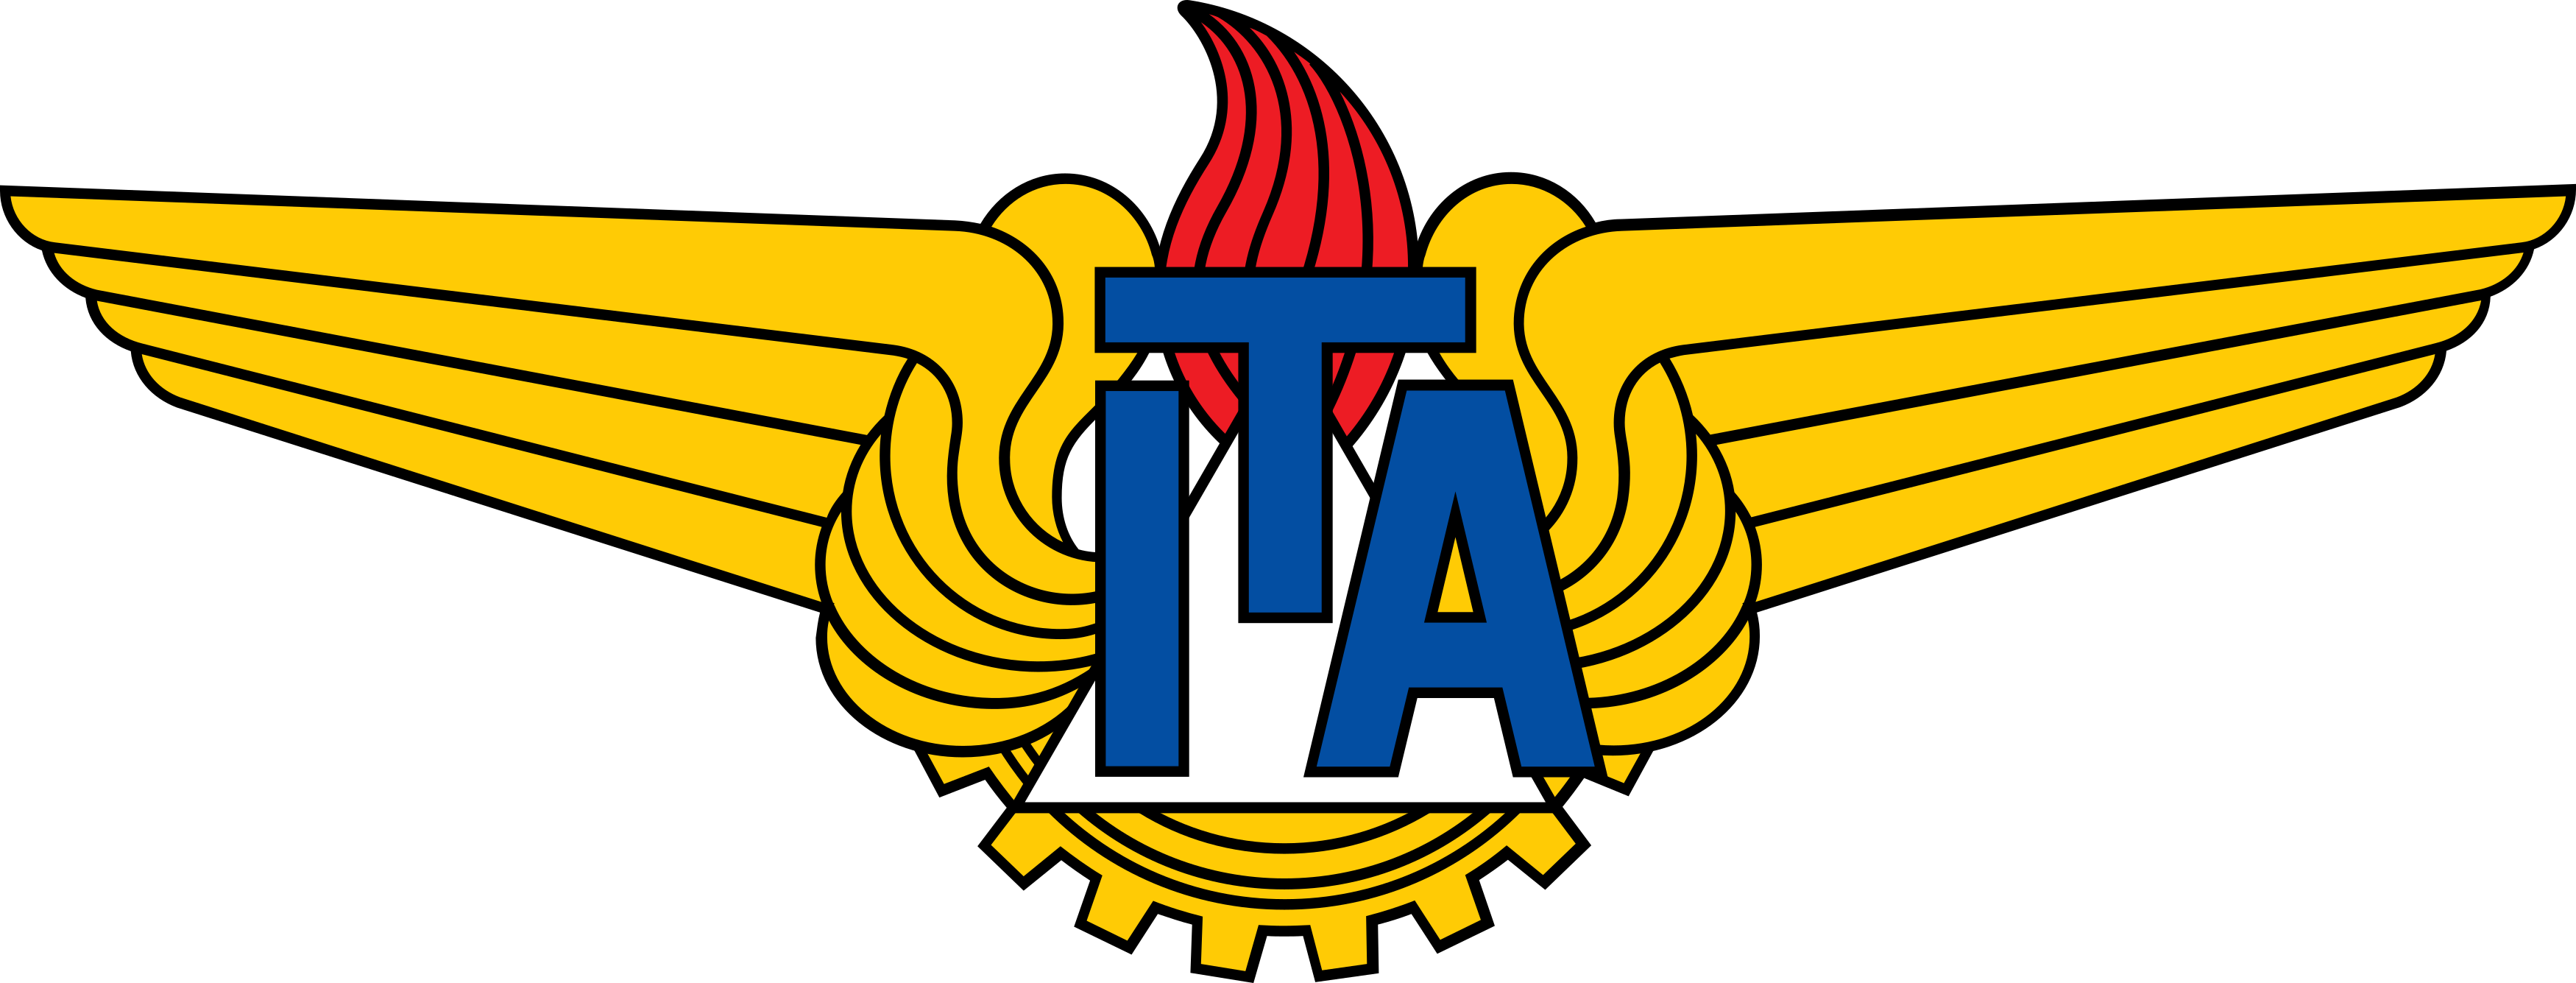 ITA - Instituto Tecnológico de Aeronáutica